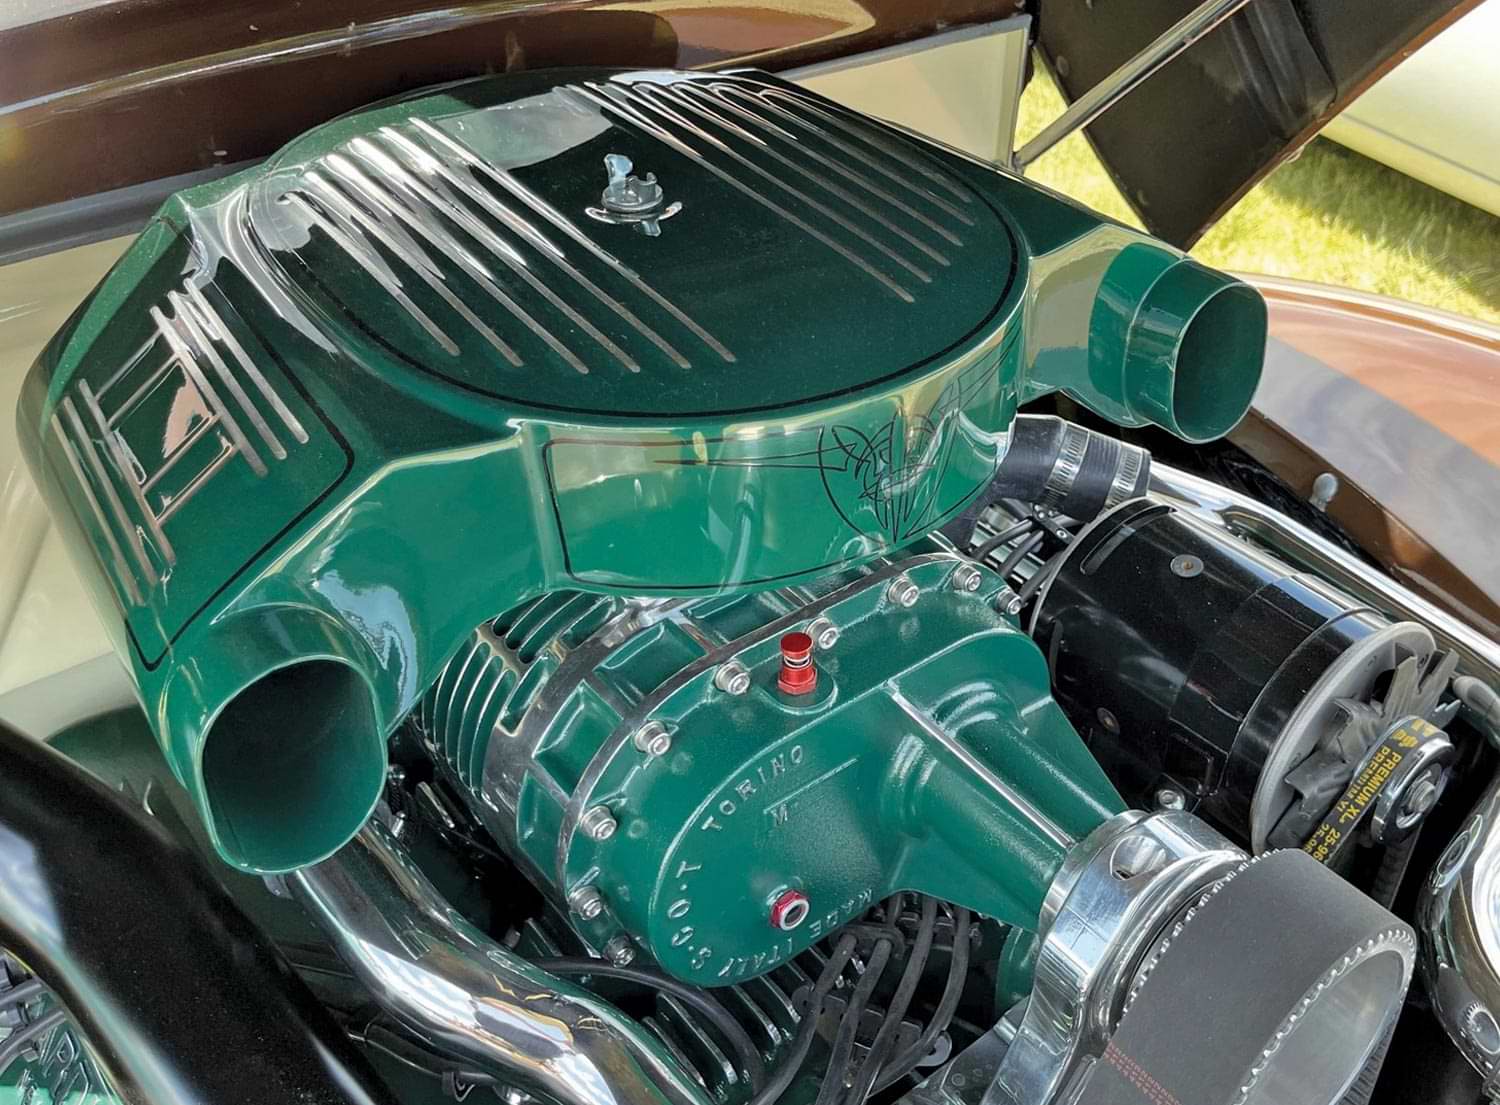 view of Powermaster's PowerGEN alternator installed on a green engine